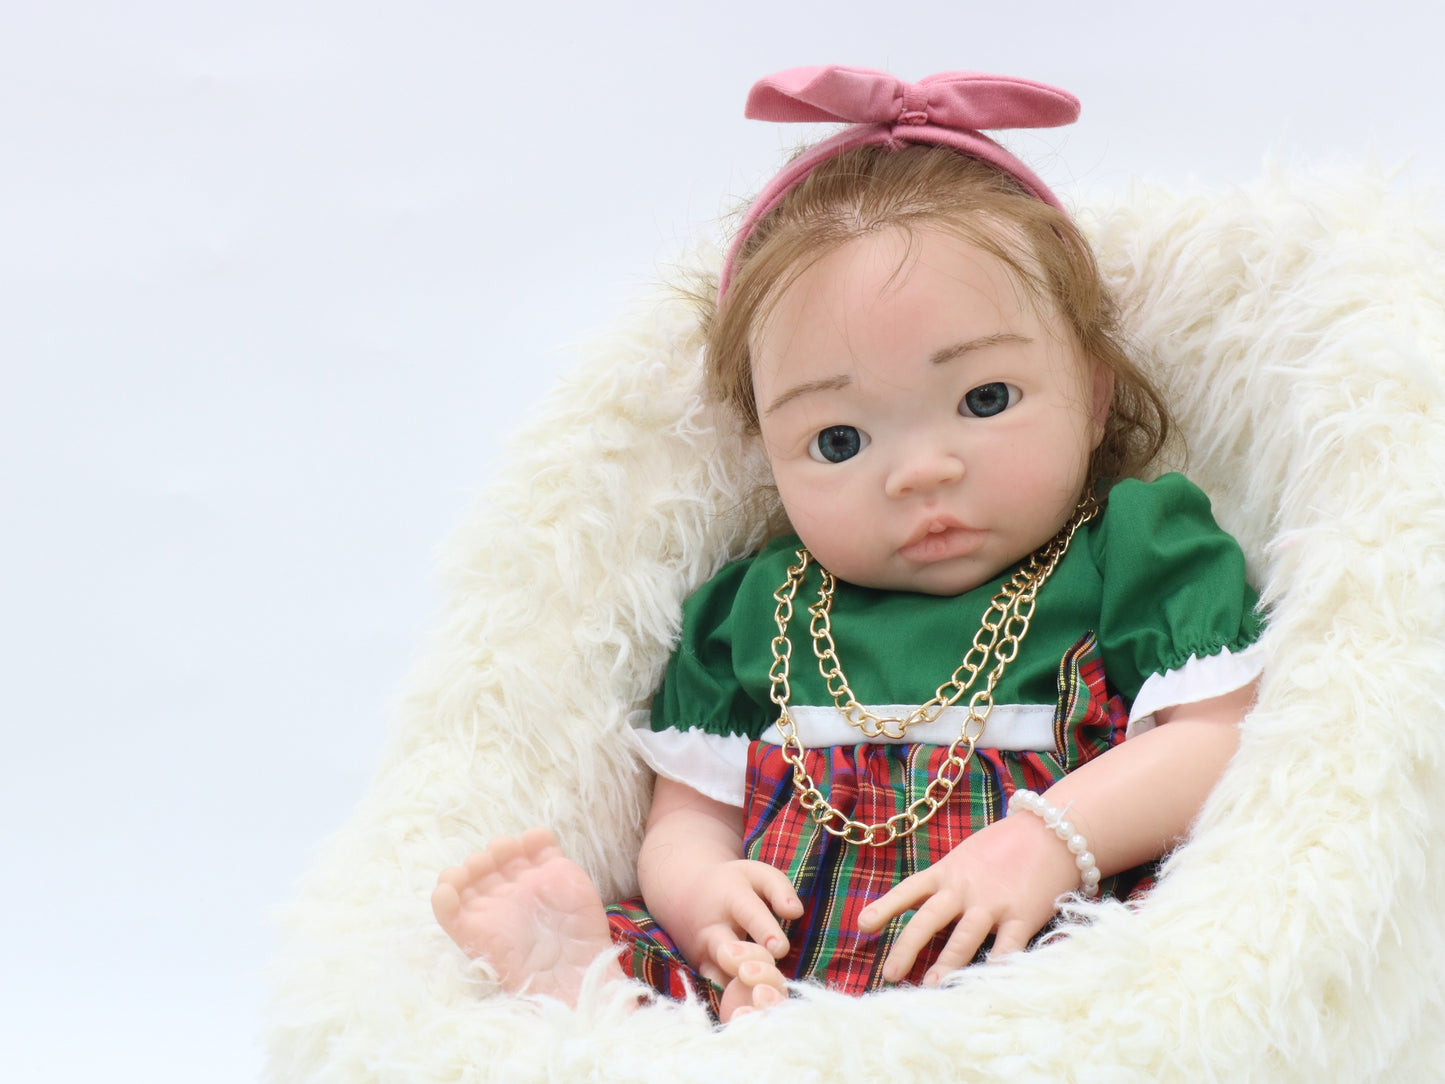 18INCH 45CM Full Solid Silicone Reborn Doll Kits Soft TouchReborn Baby Dolls Lifelike Bebe Newborn